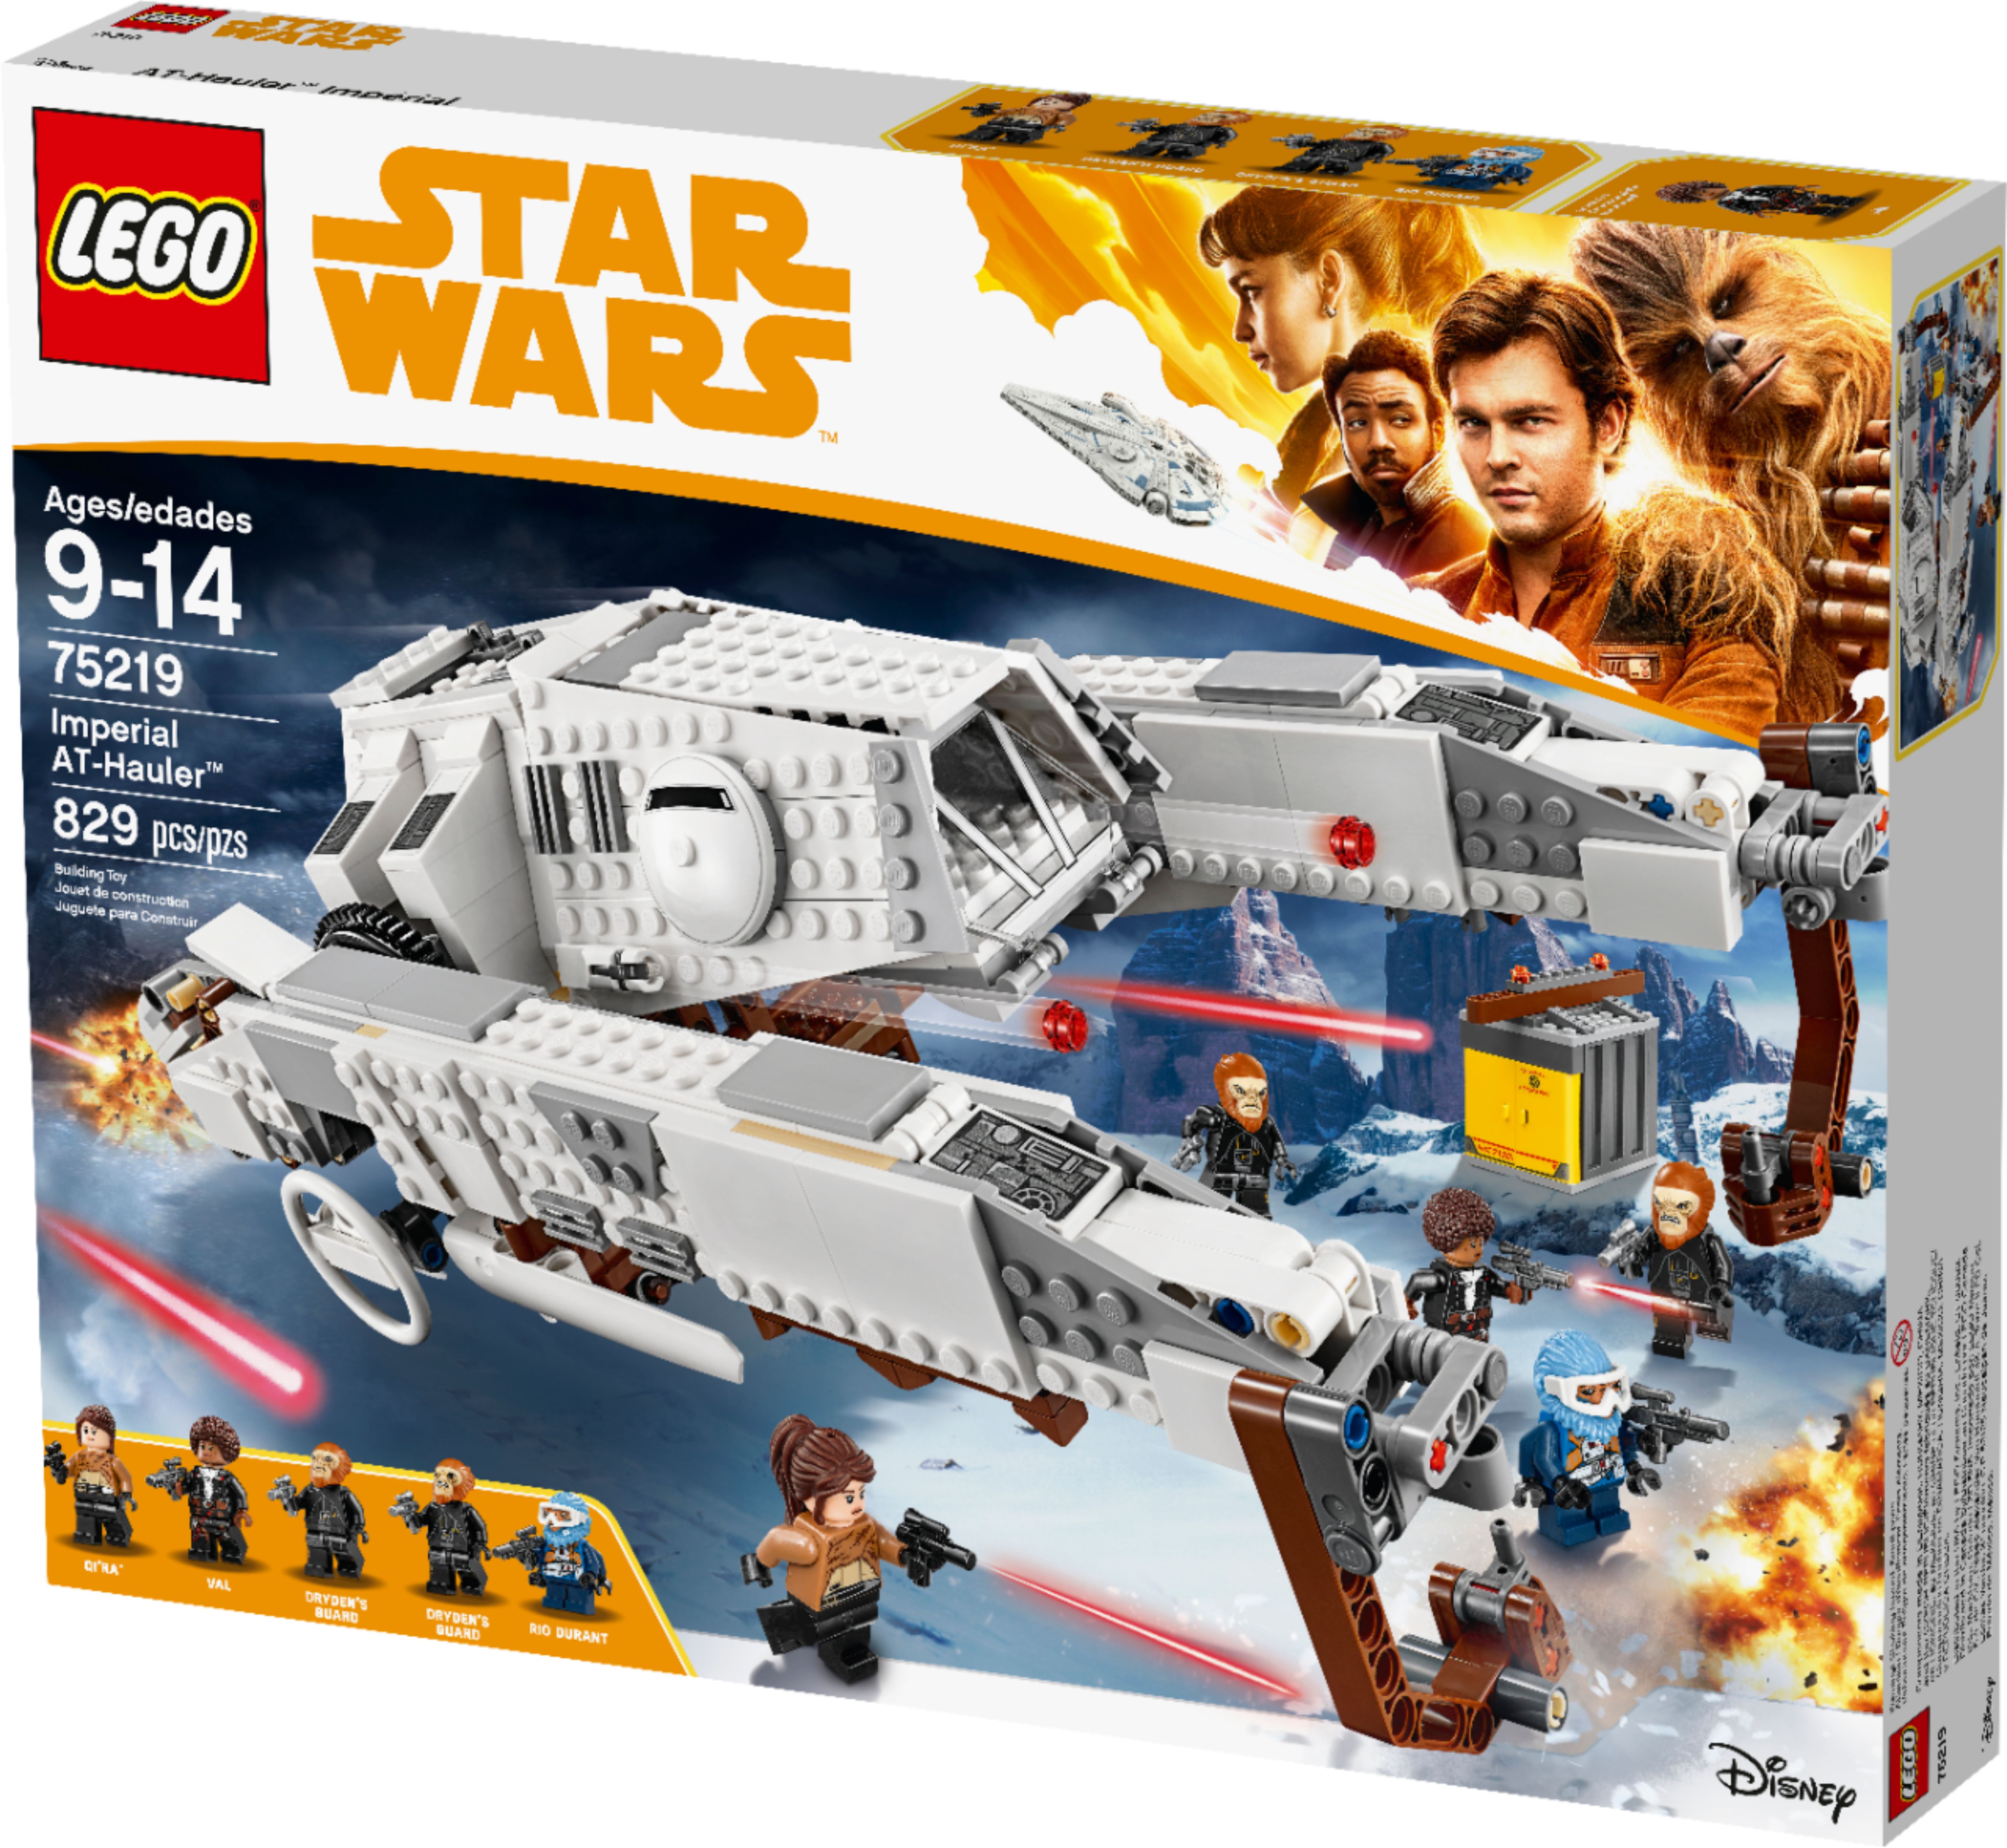 Best Buy: LEGO Star Wars Imperial AT-Hauler 75219 White 6212803